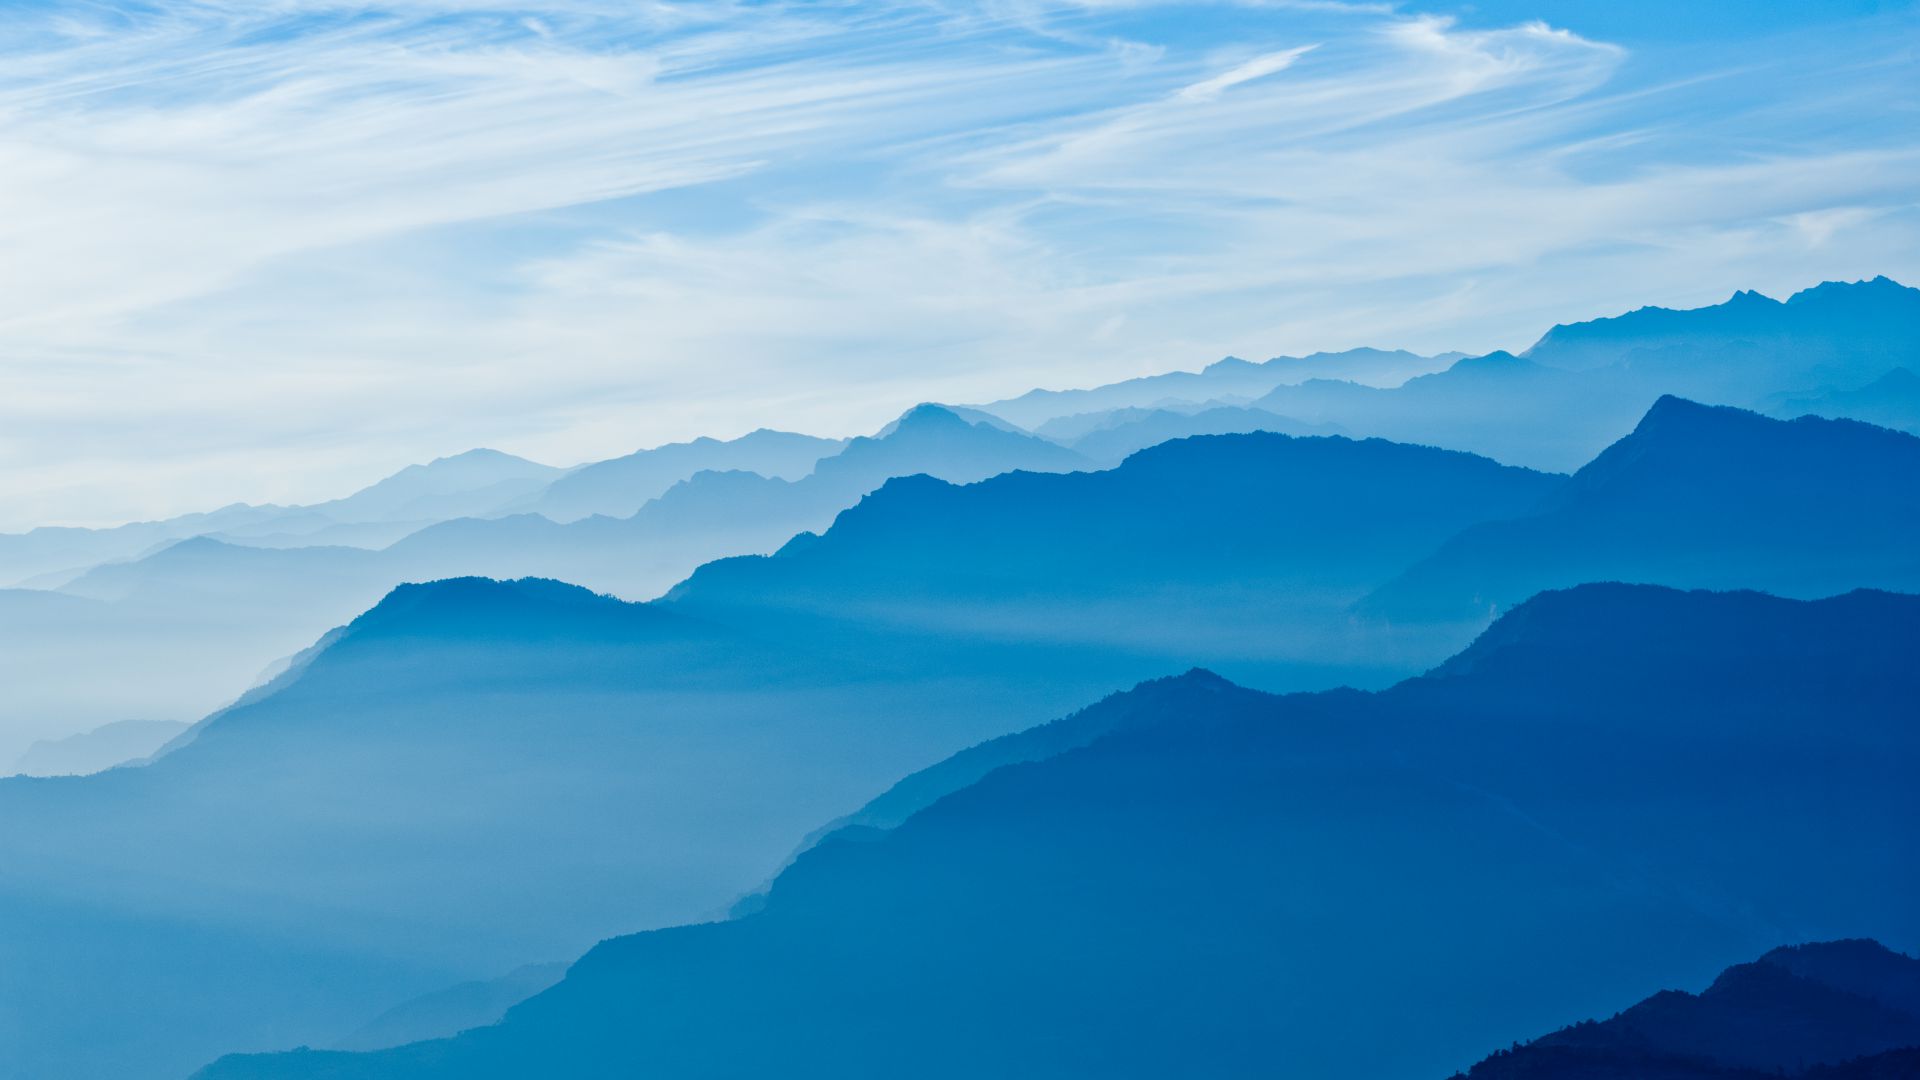 Гималаи, 5k, 4k, Непал, горы, небо, облака, Himalayas, 5k, 4k wallpaper, Nepal, mountains, sky, clouds (horizontal)